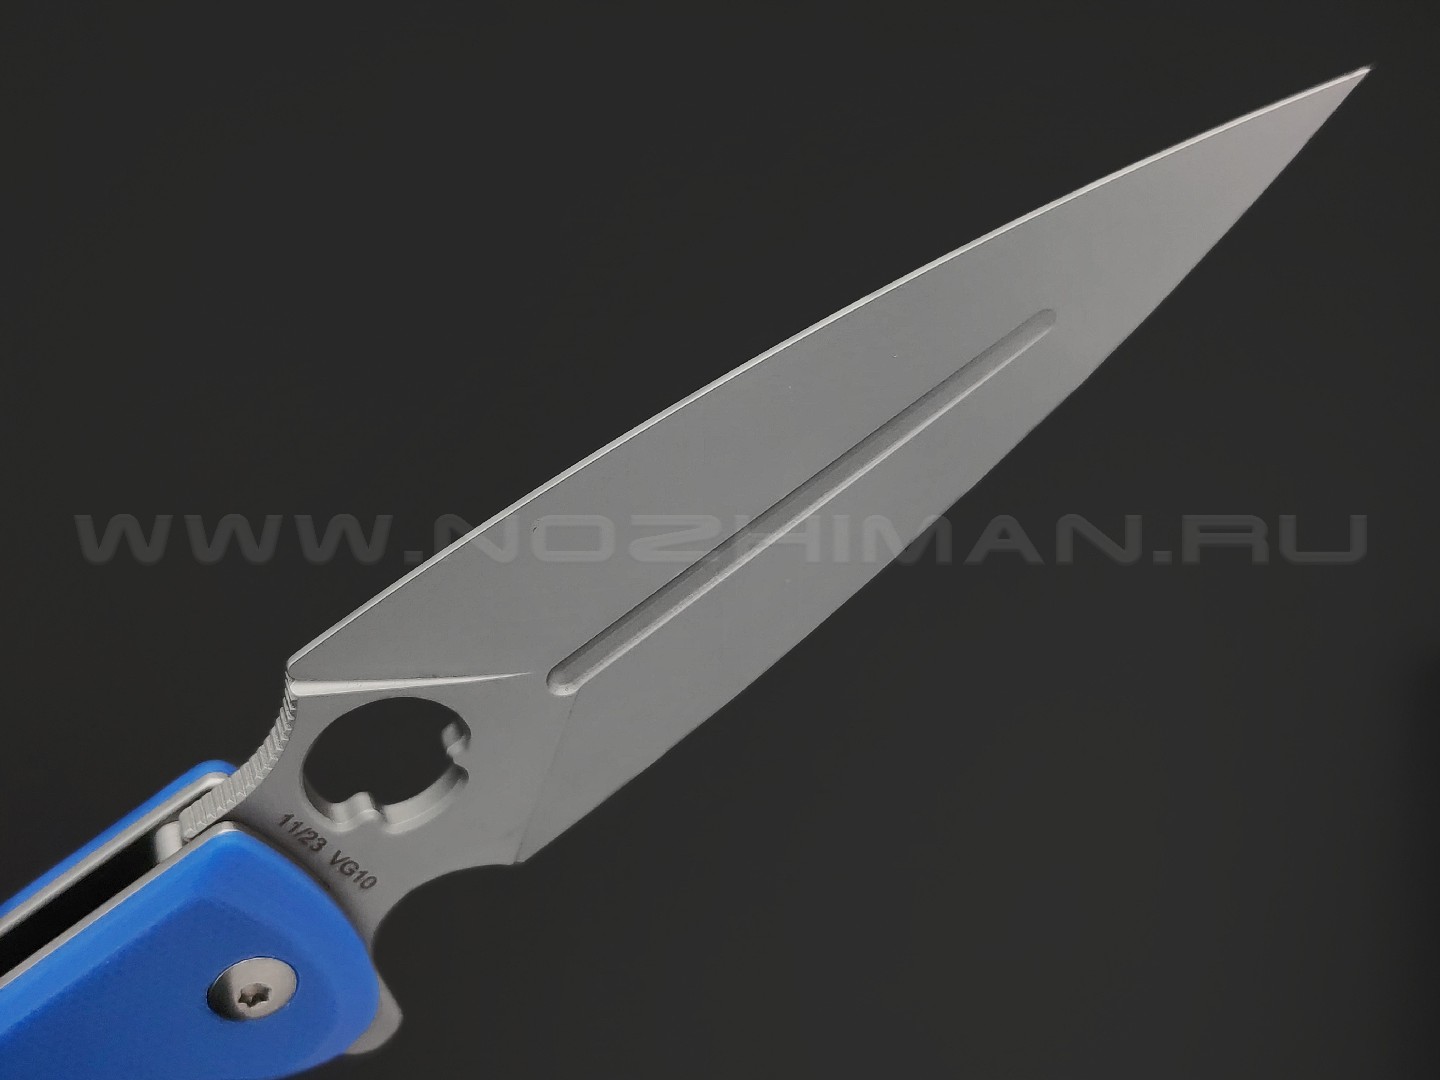 Daggerr нож Arrow Blue BB сталь VG-10 bead-blast, рукоять G10 blue